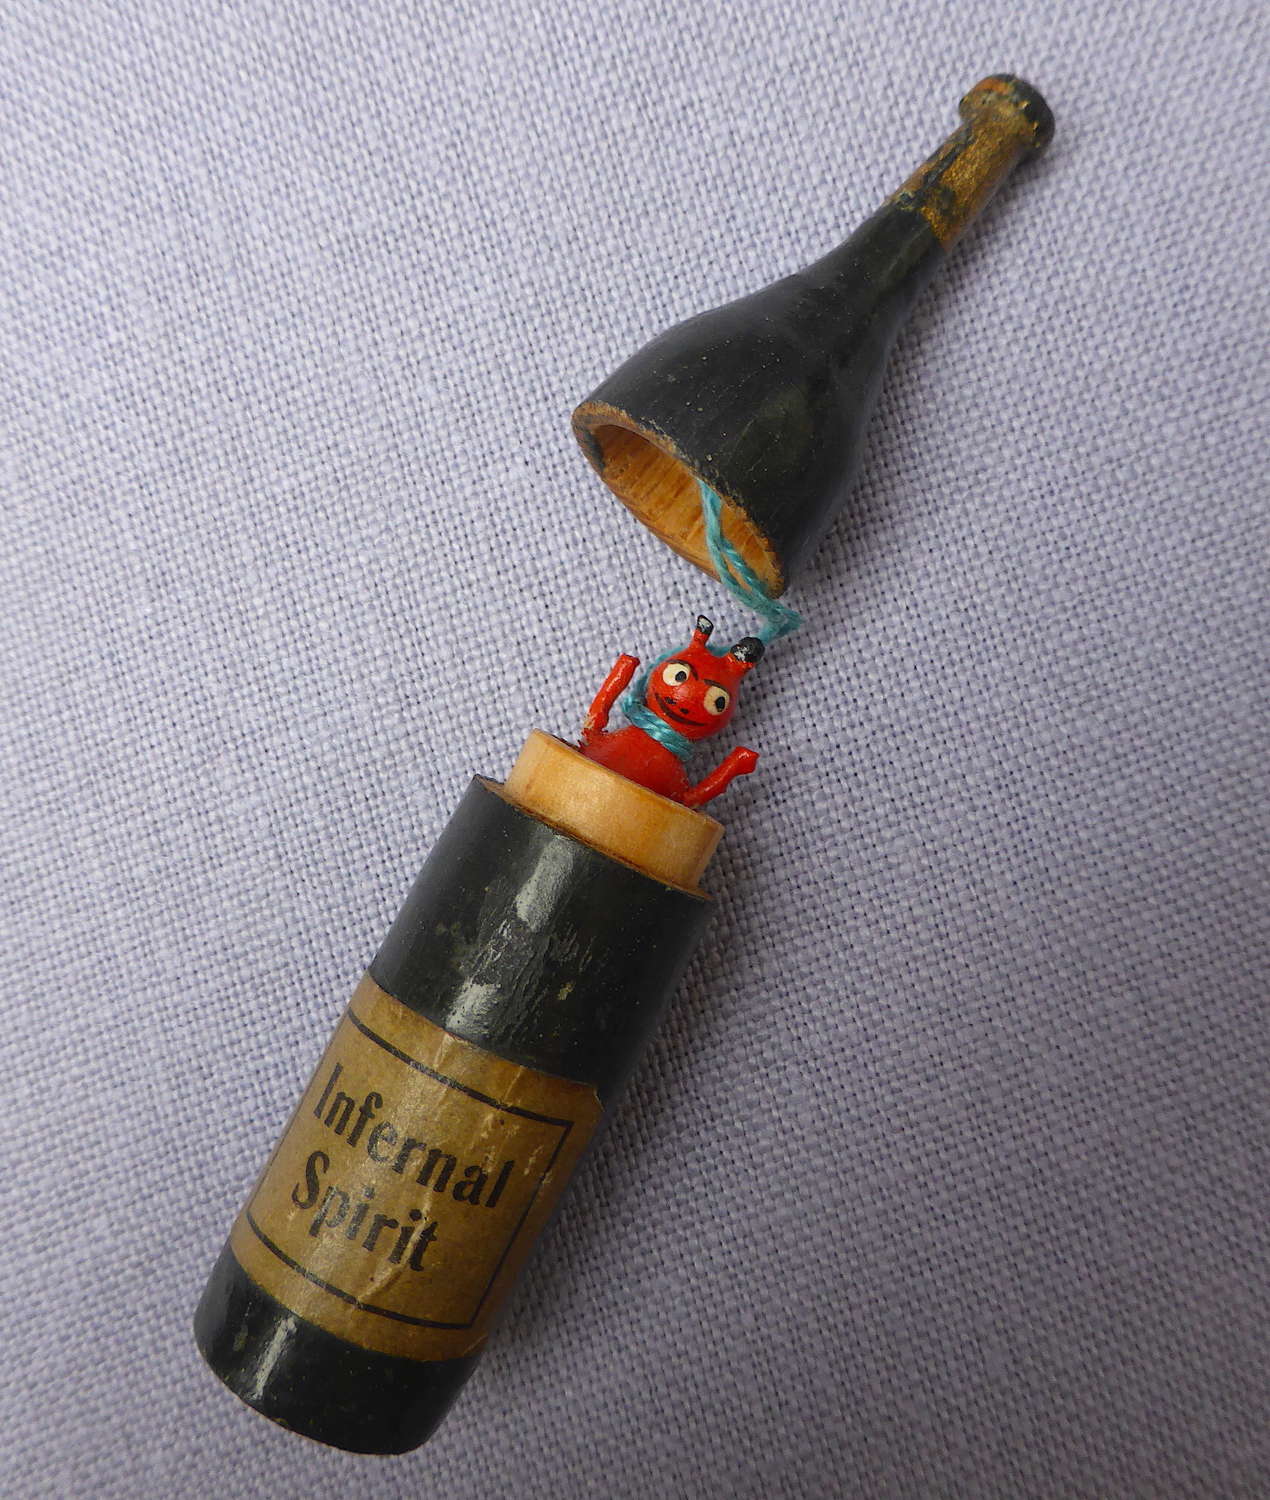 Little Devil in Infernal Spirit Bottle 1930s